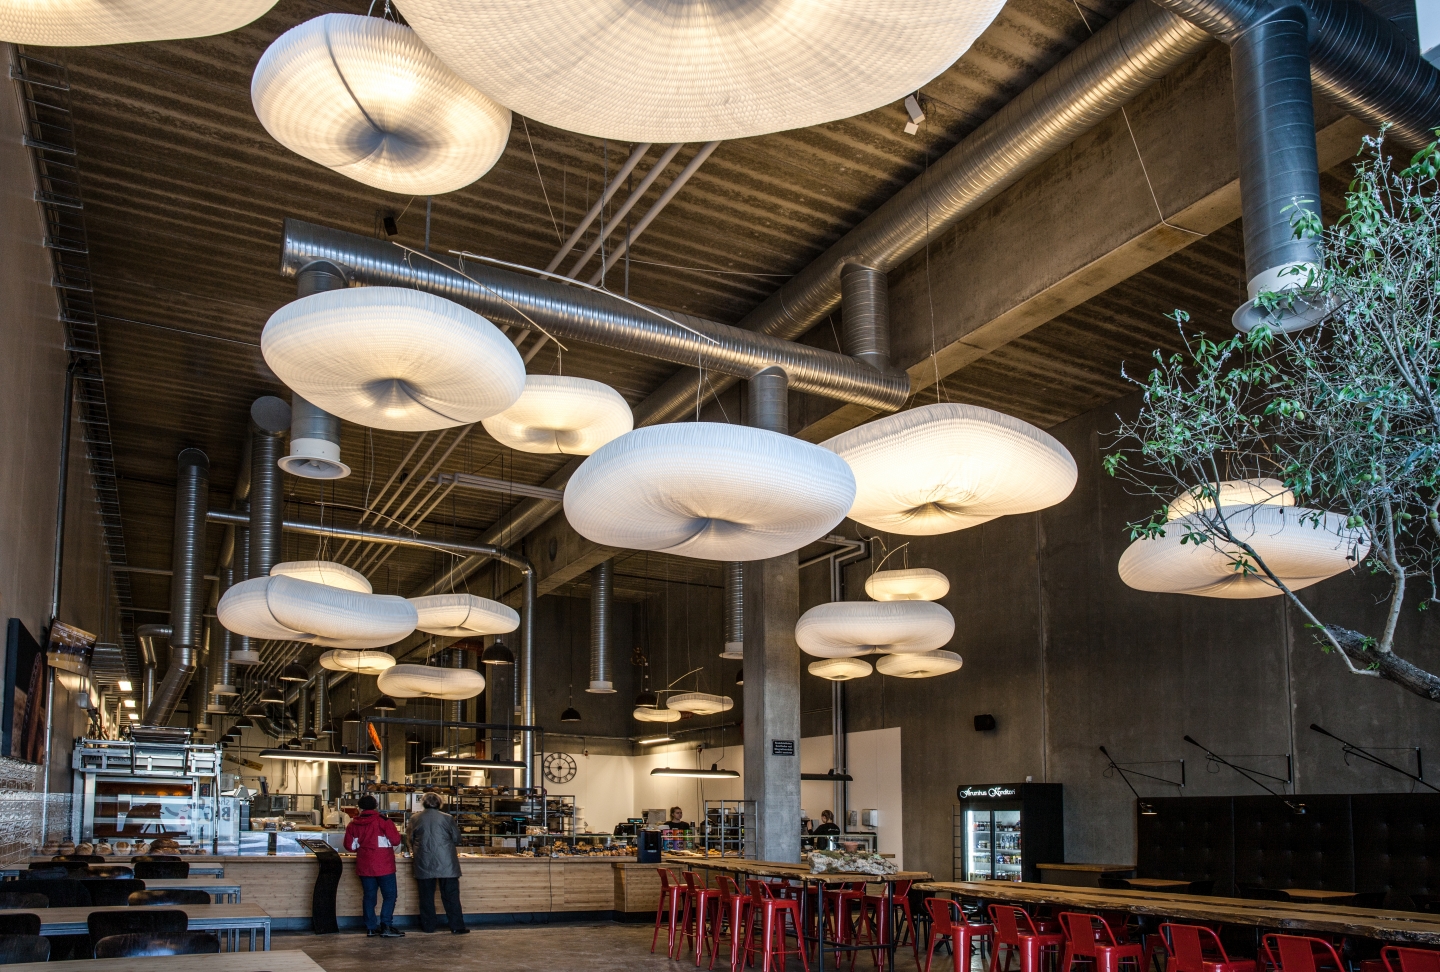 molo cloud softlight pendants and thinwall + LED at the Farumhus Konditori cafe in Herlev, Denmark